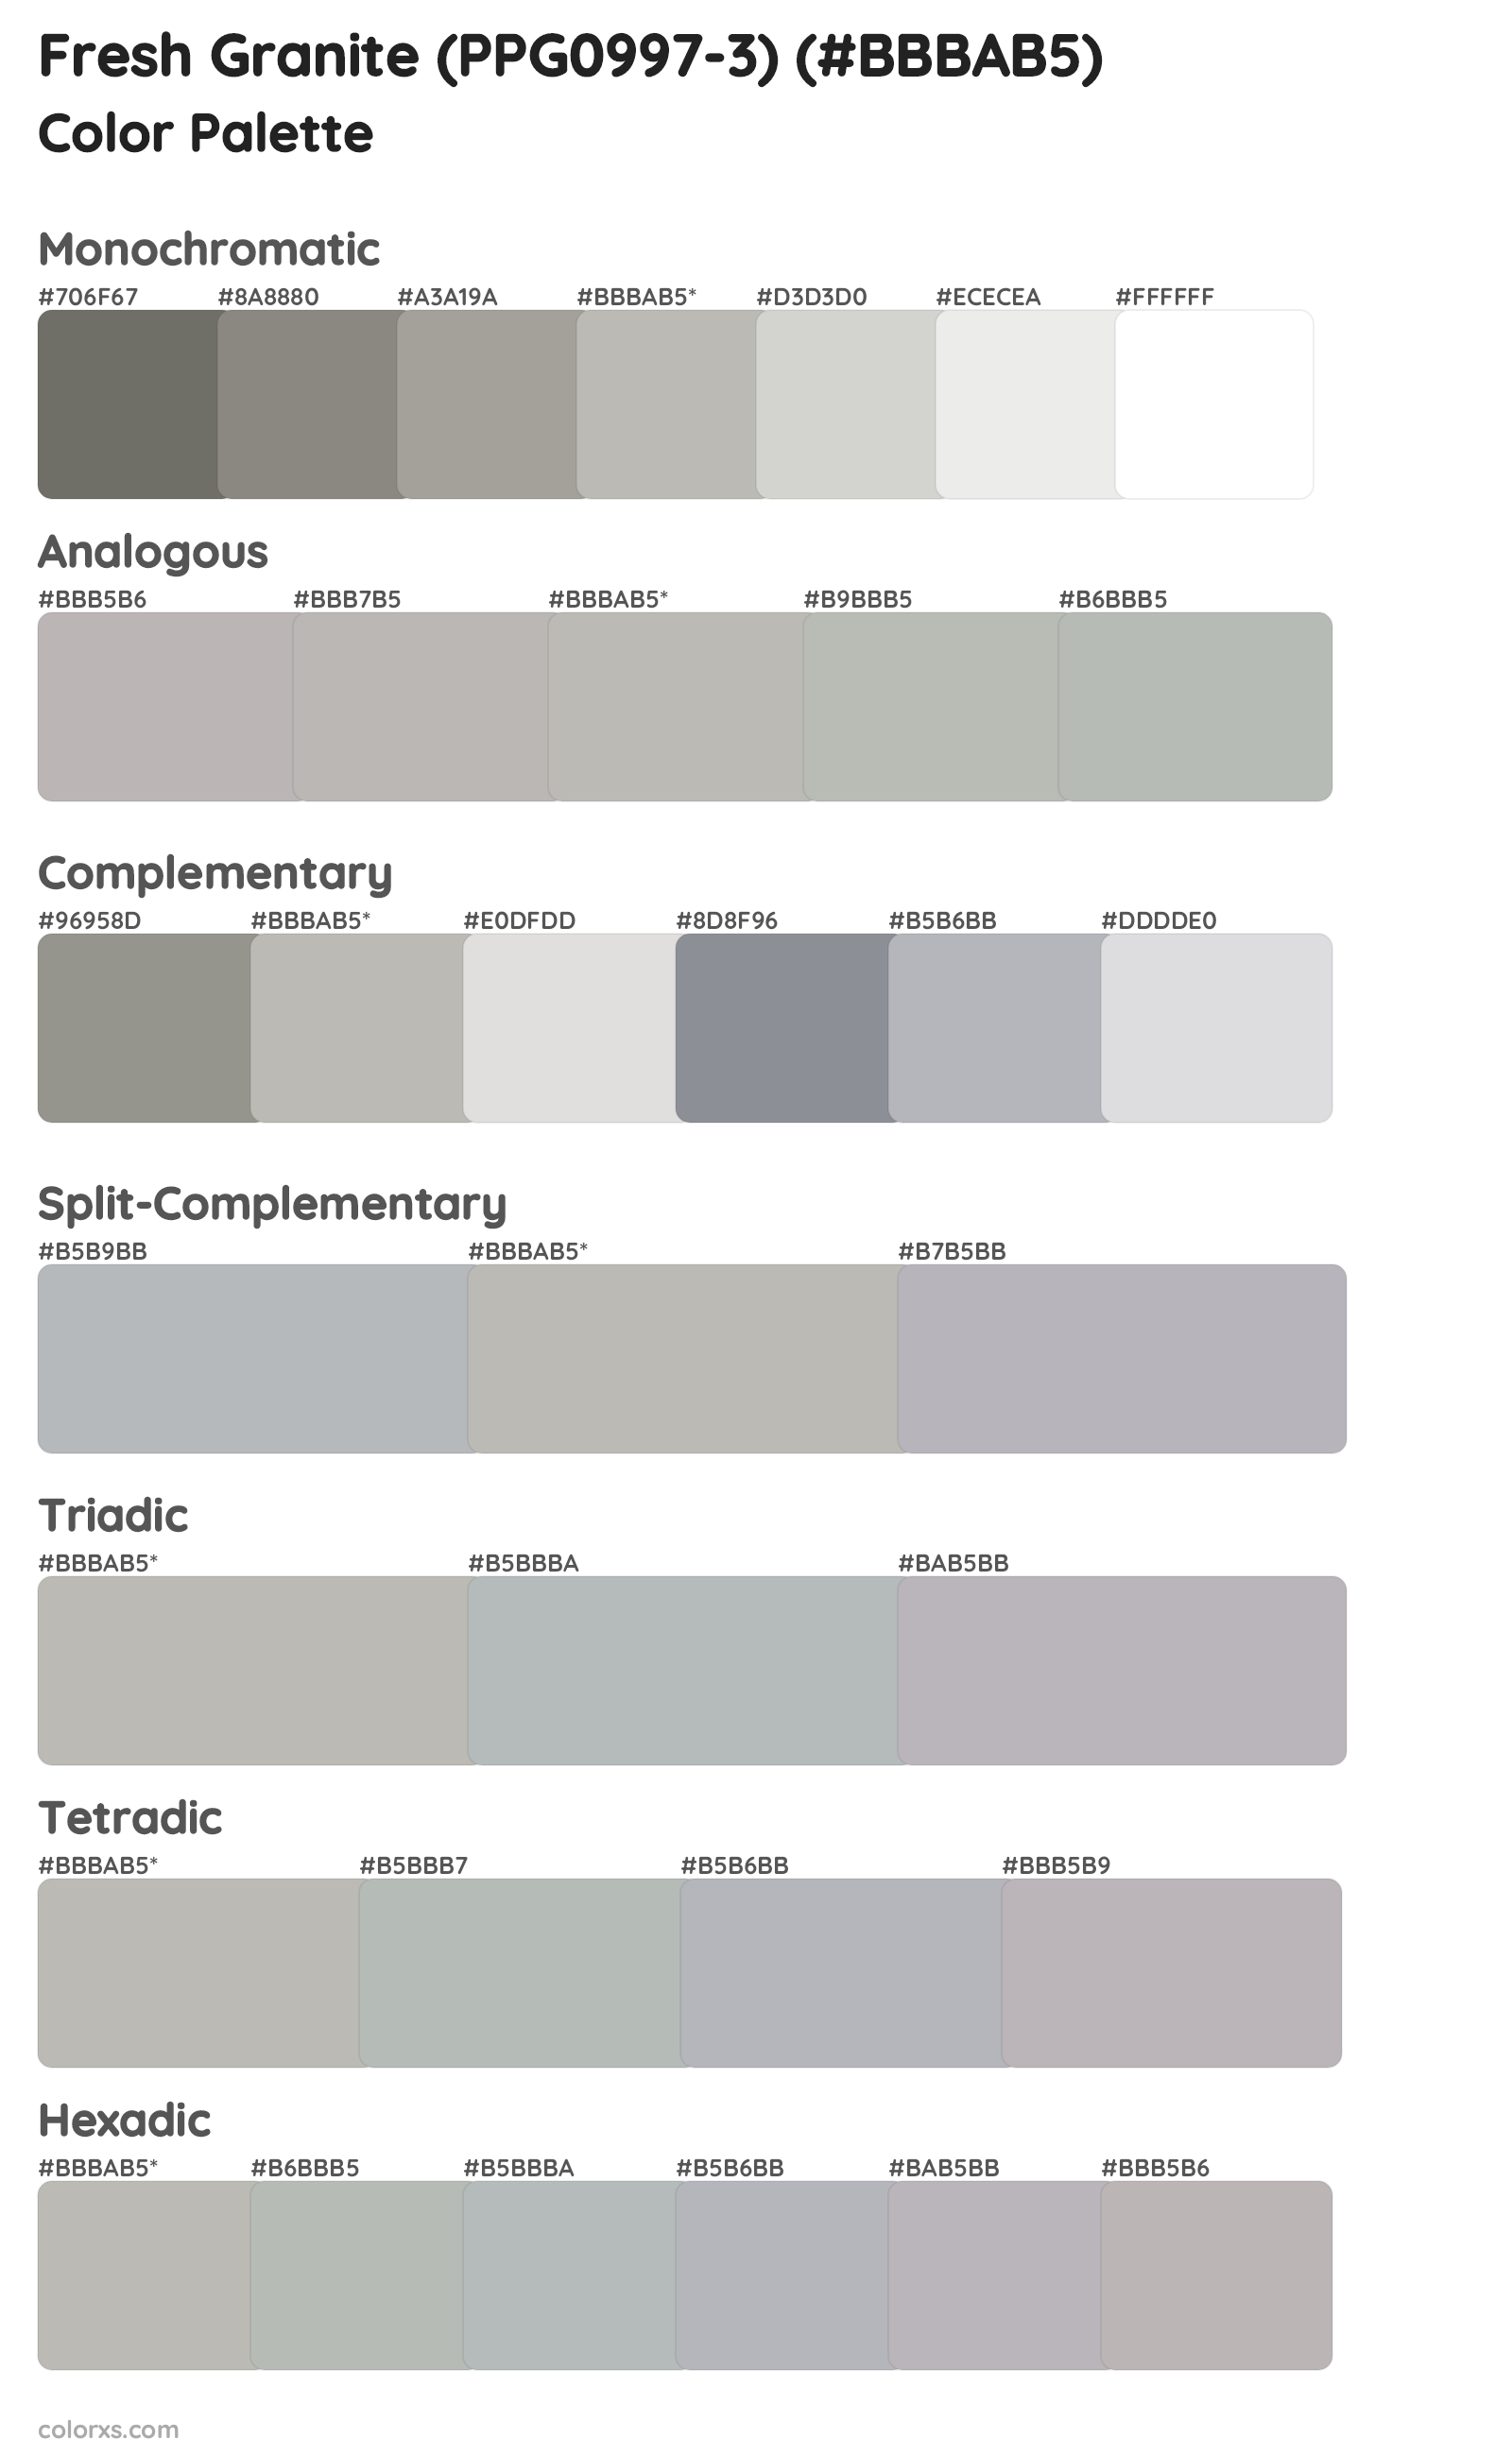 Fresh Granite (PPG0997-3) Color Scheme Palettes